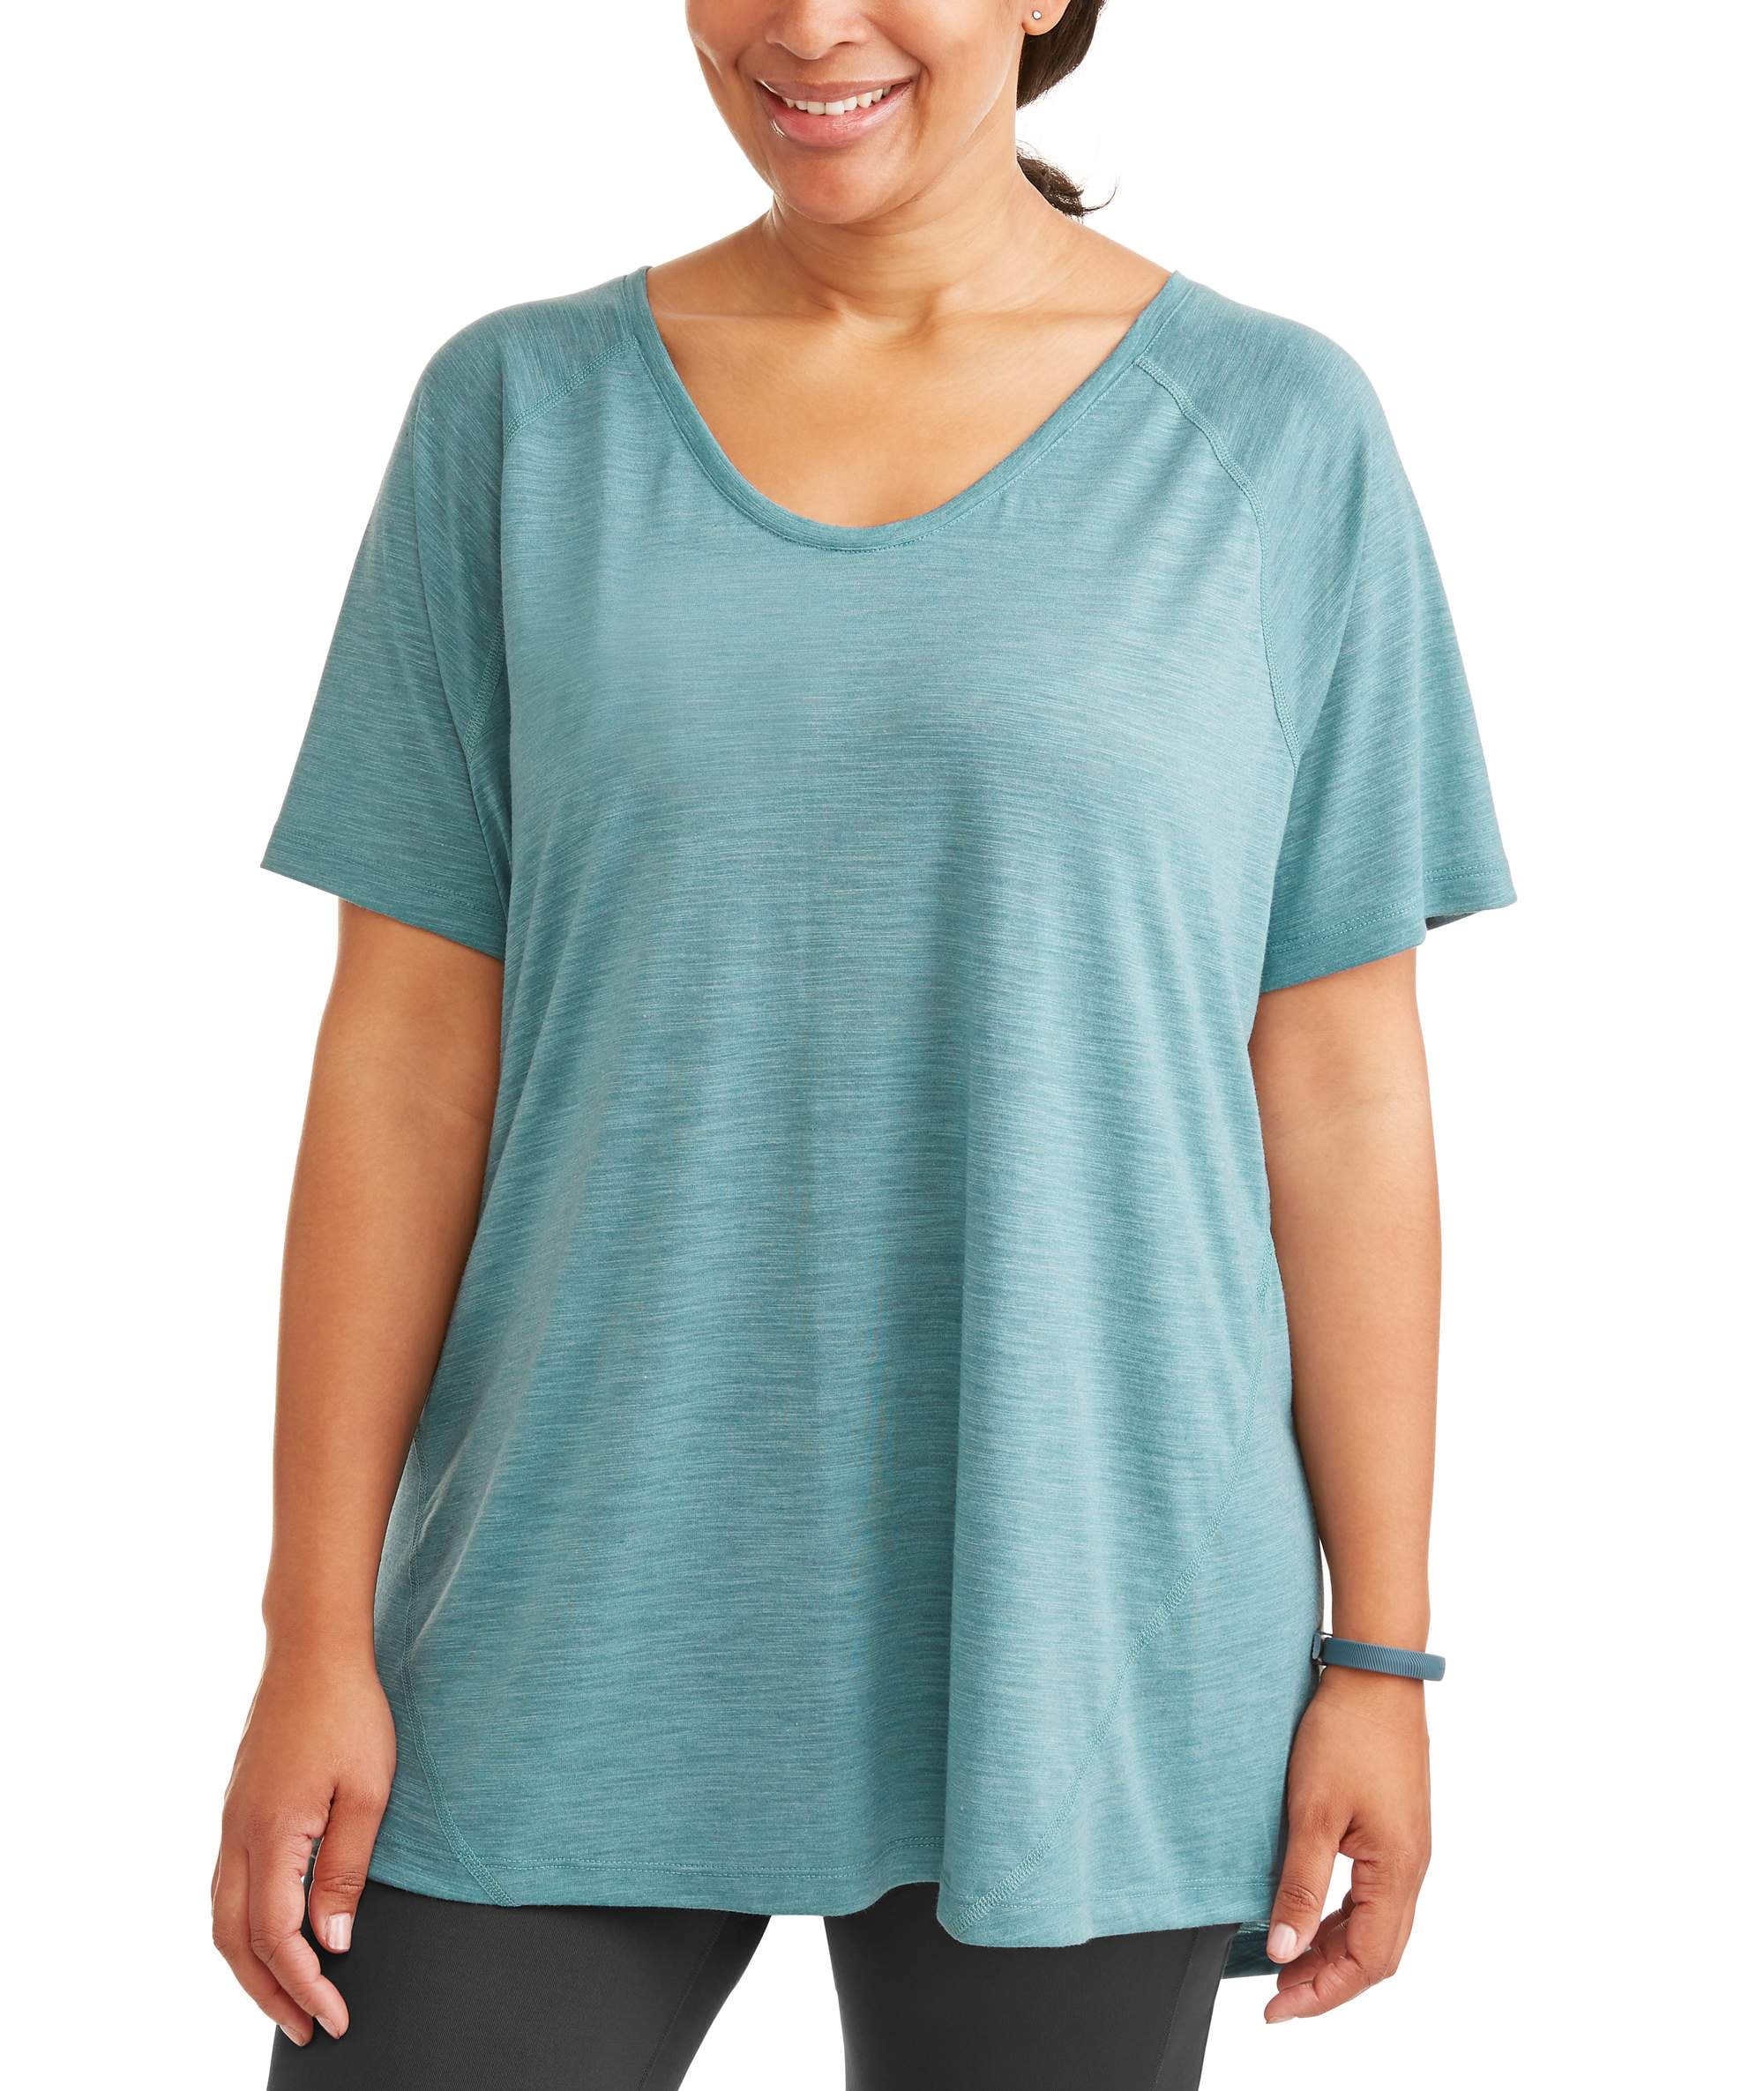 Terra & Sky Cotton T-shirts for Women